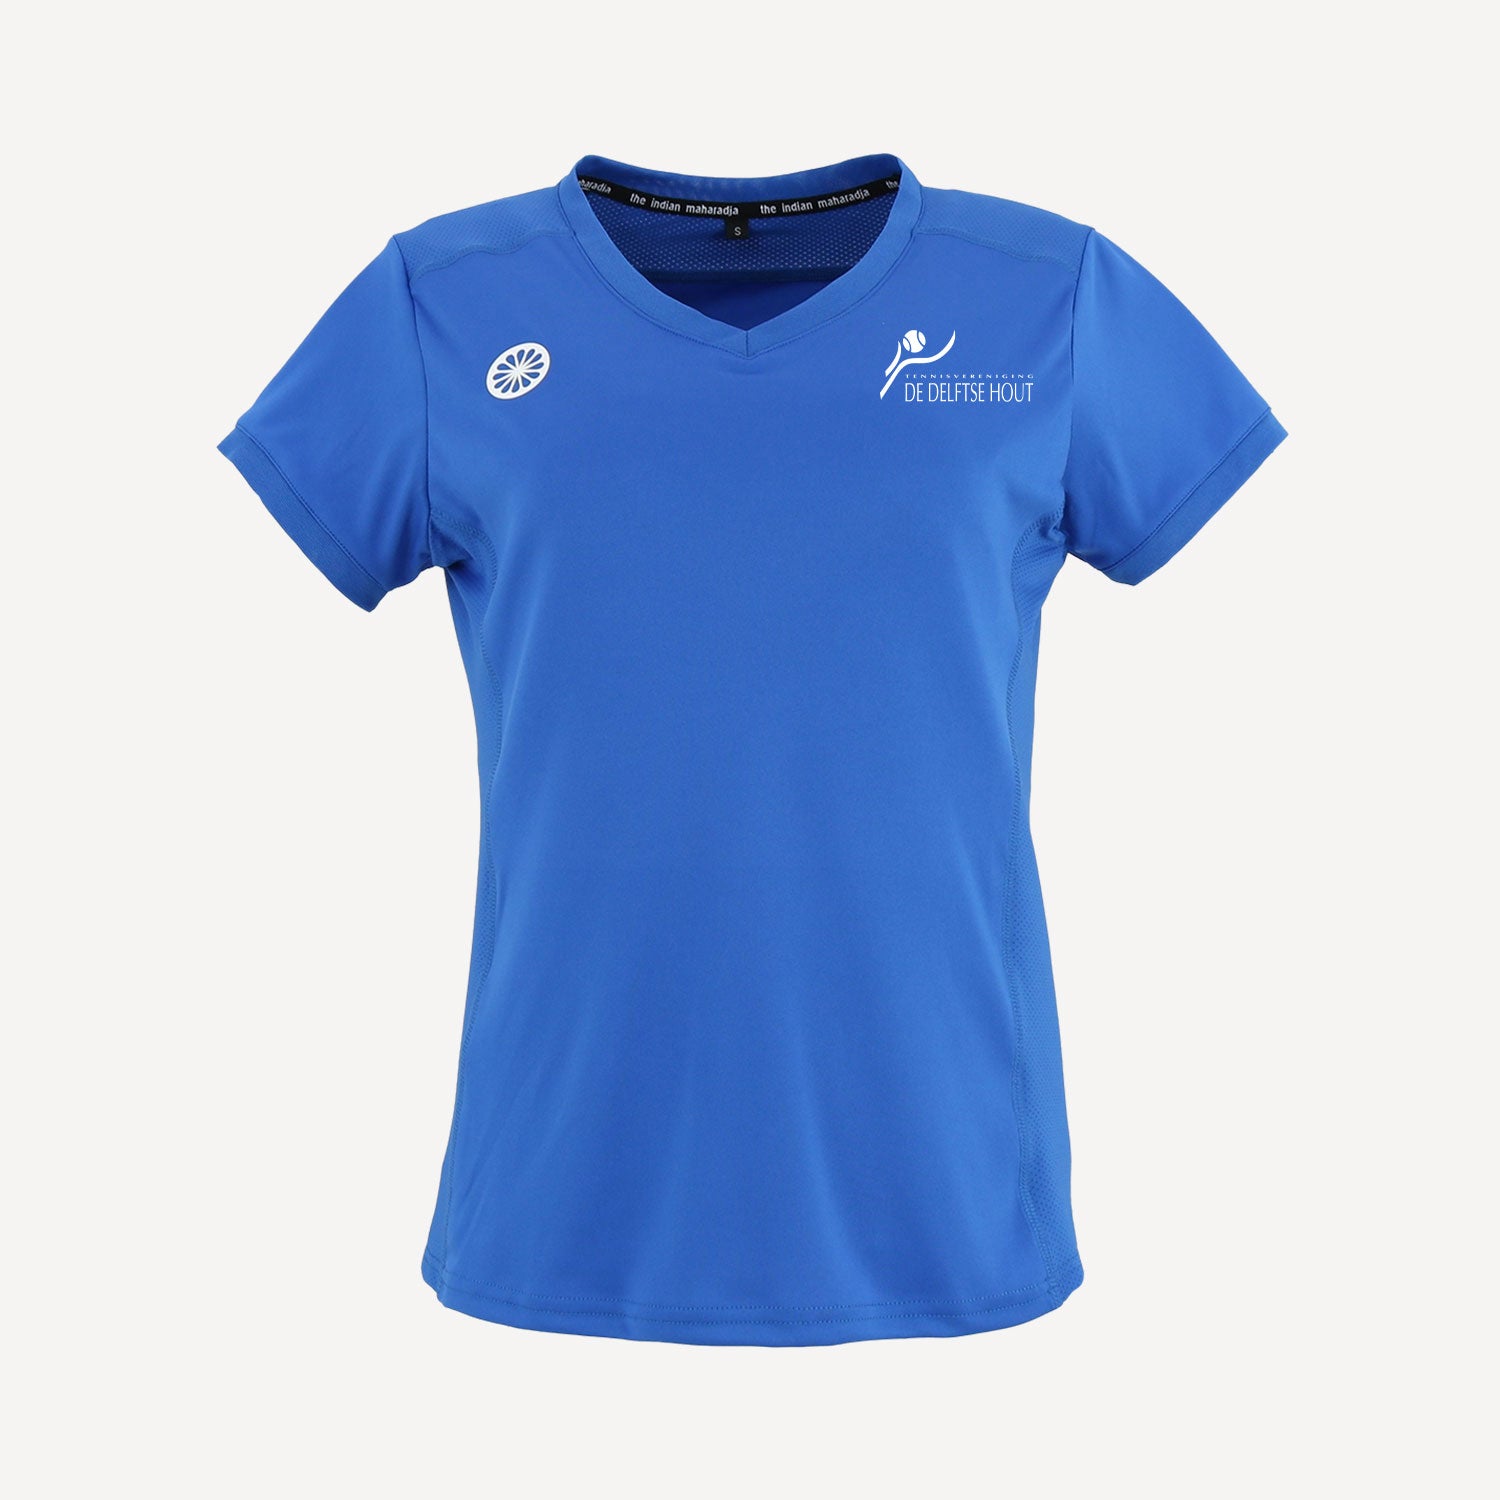 The Indian Maharadja Kadiri Girls' Tennis Shirt - De Delftse Hout - Blue (1)